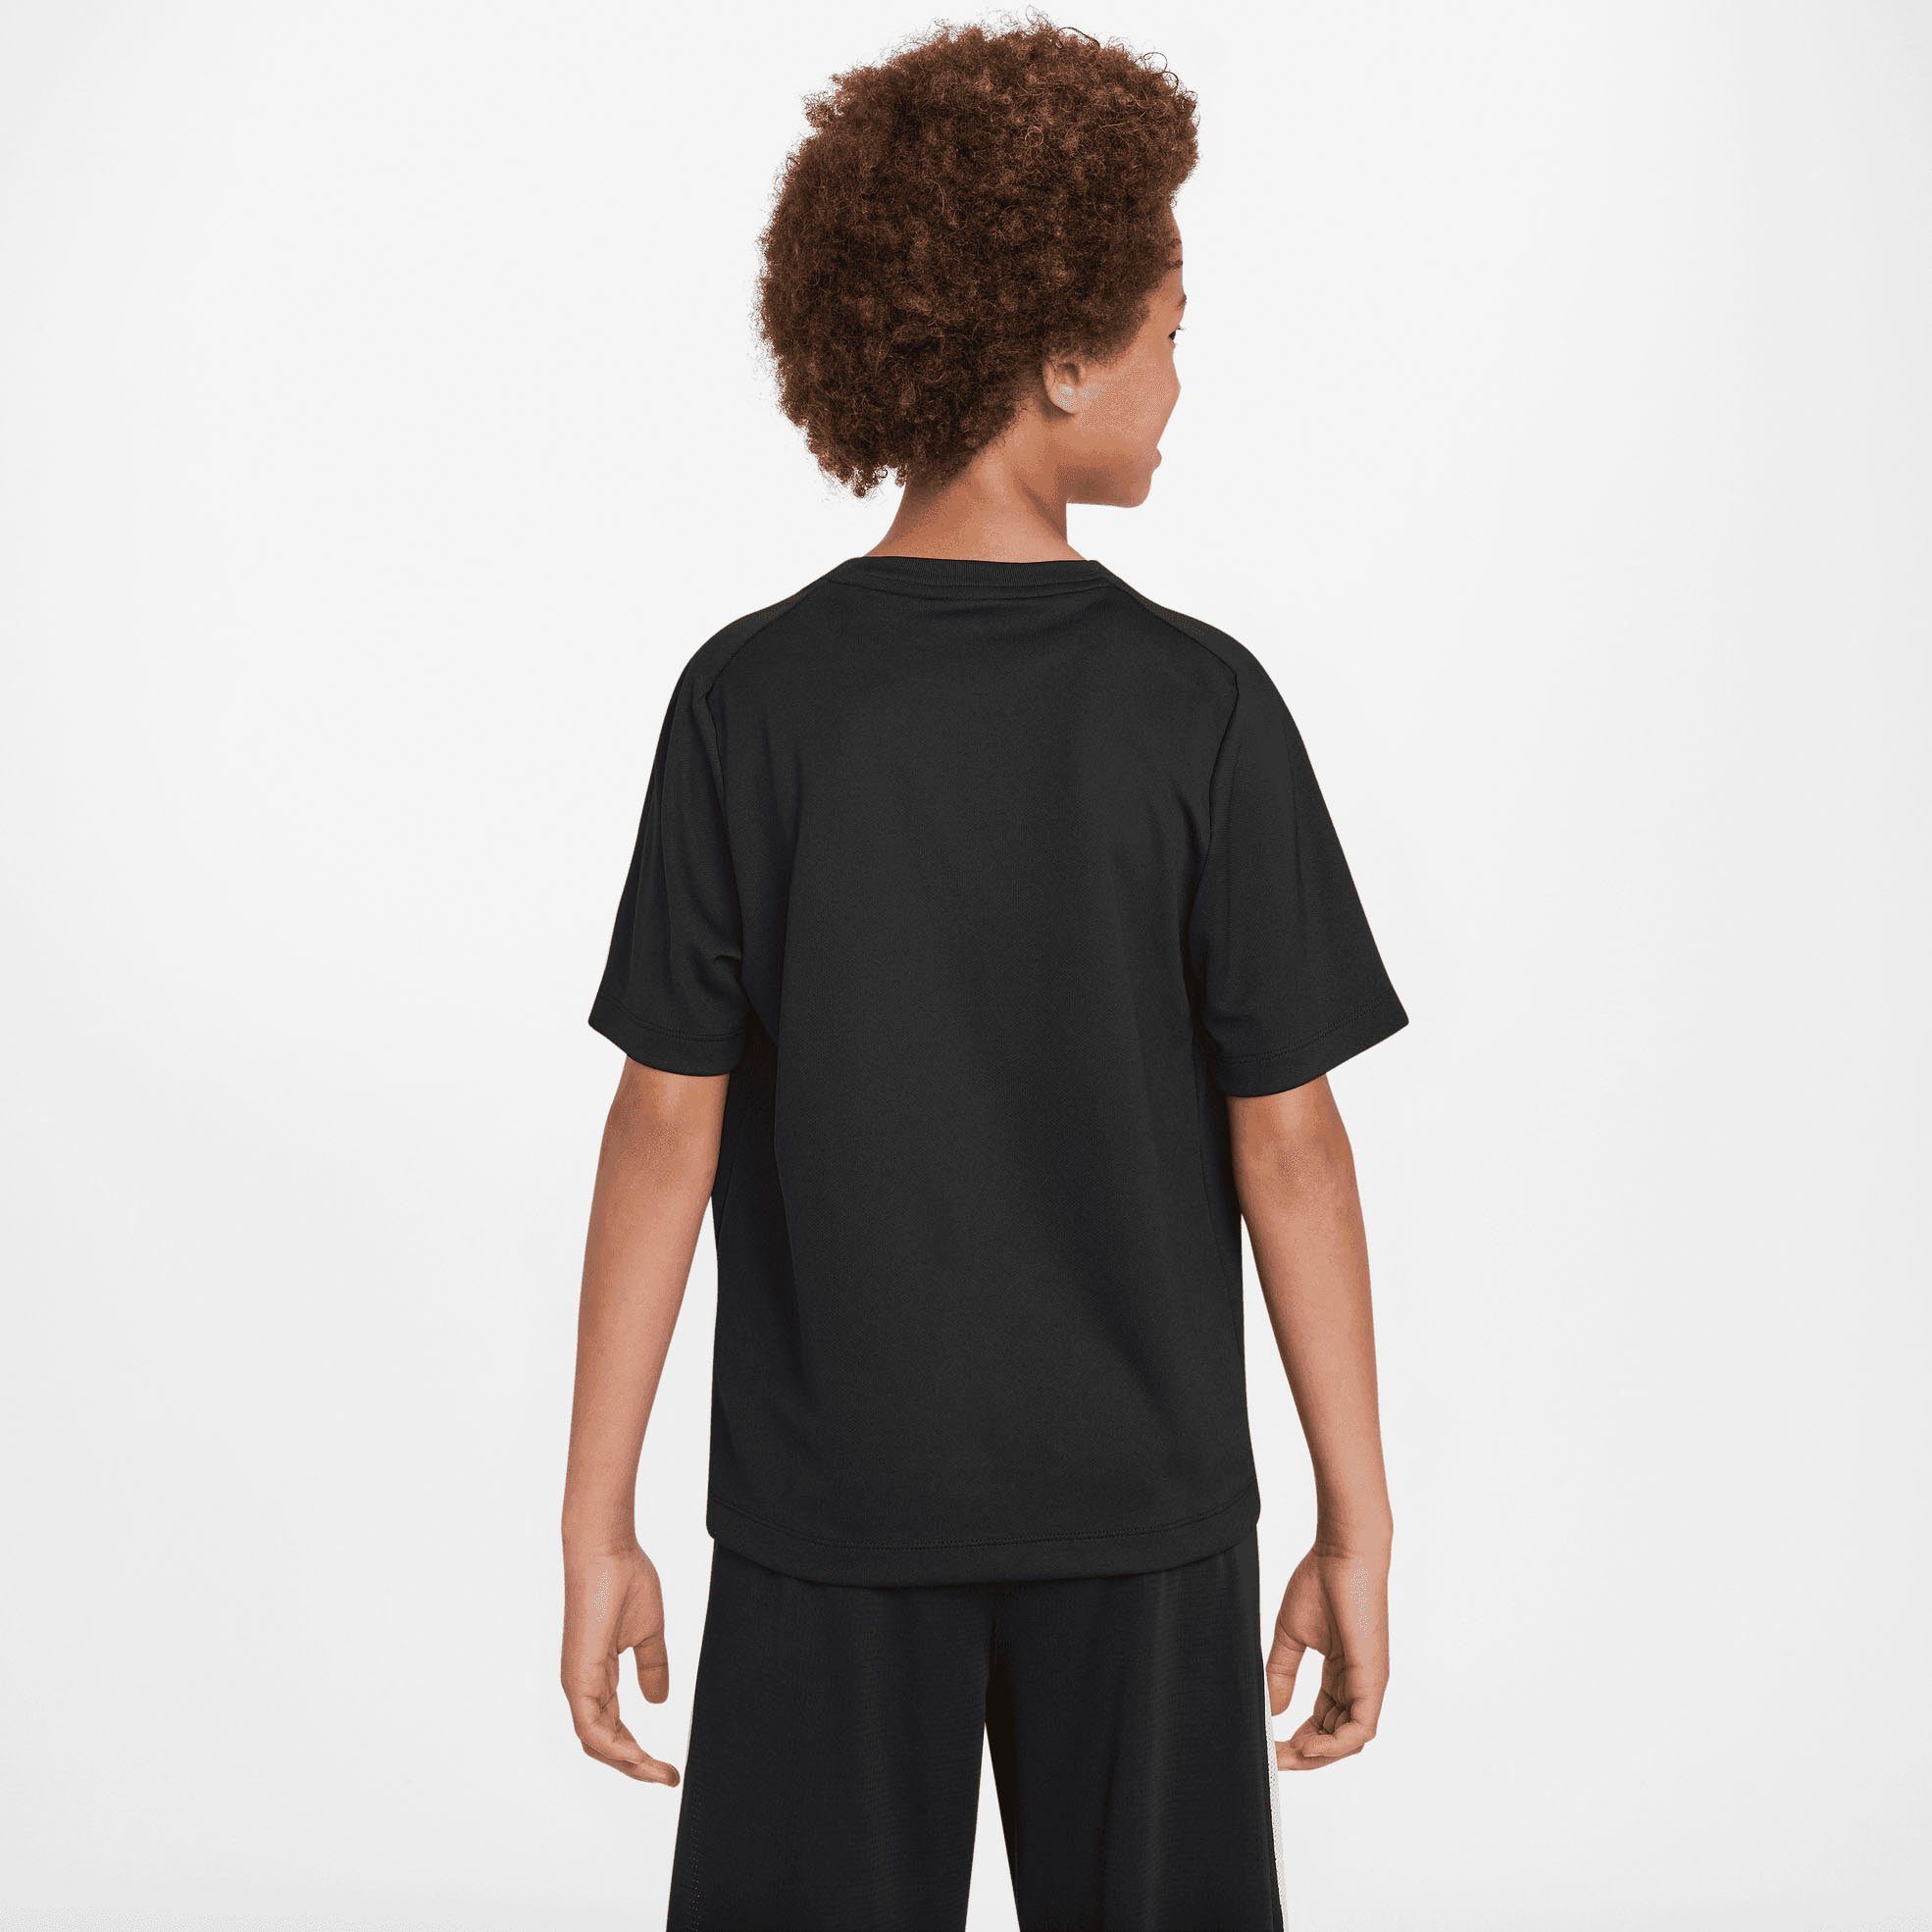 TOP (BOYS) MULTI+ BIG BLACK/WHITE Nike GRAPHIC Trainingsshirt TRAINING DRI-FIT KIDS'